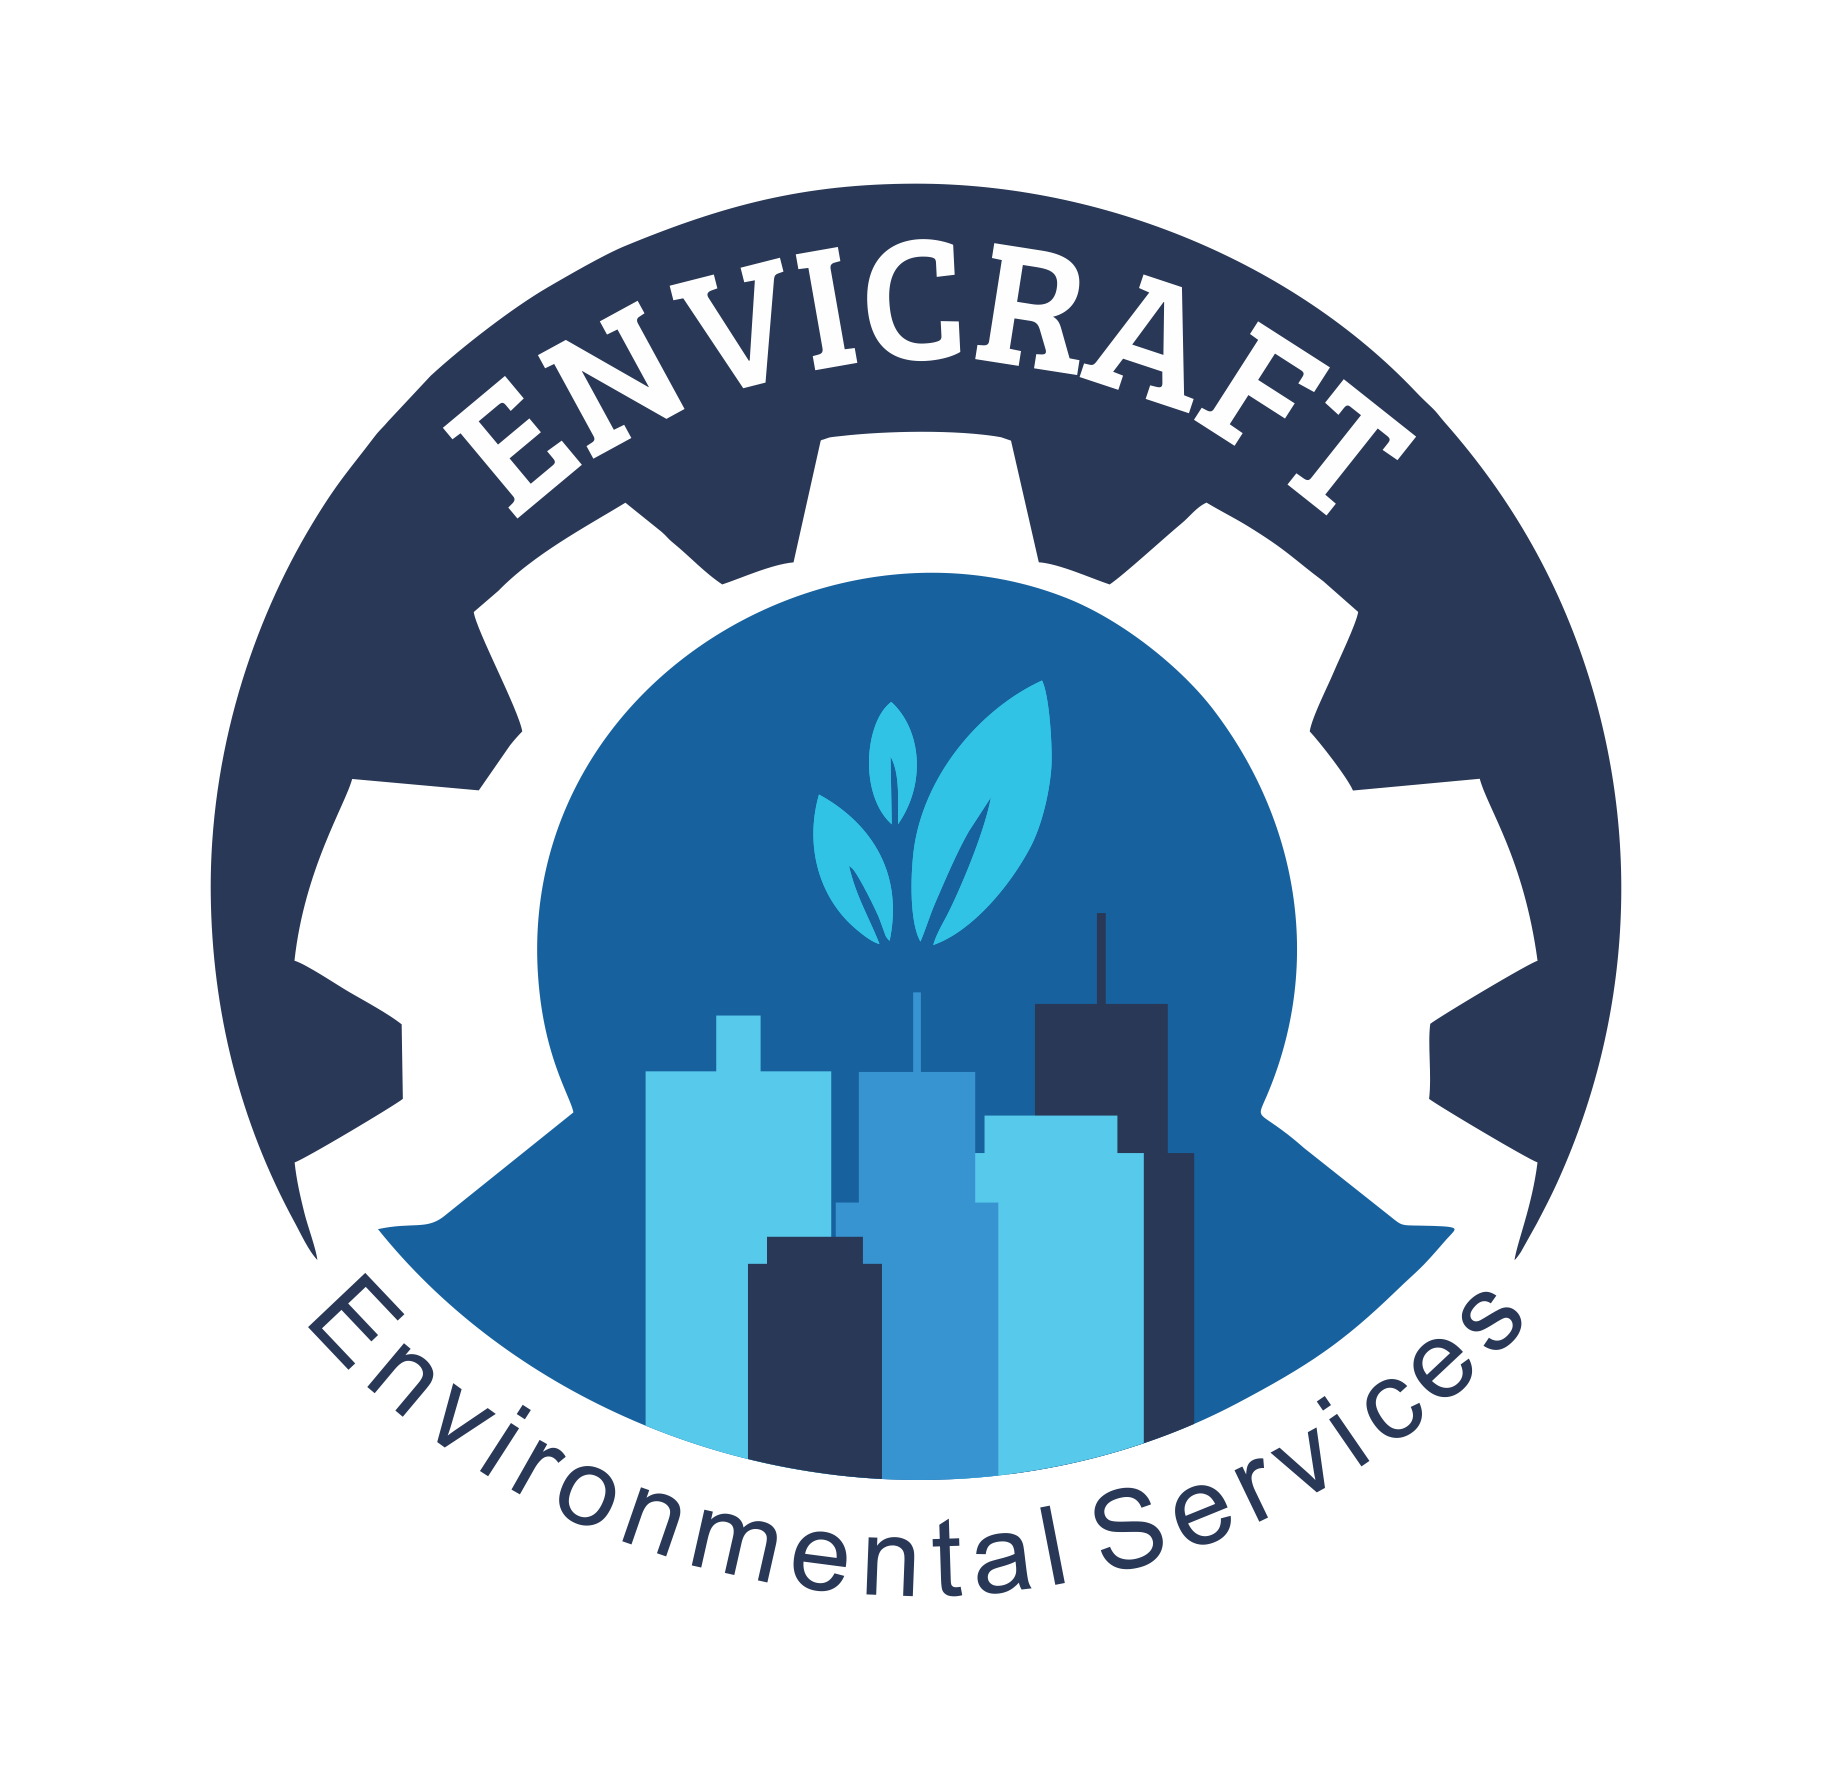 Envicraft Environmental Services